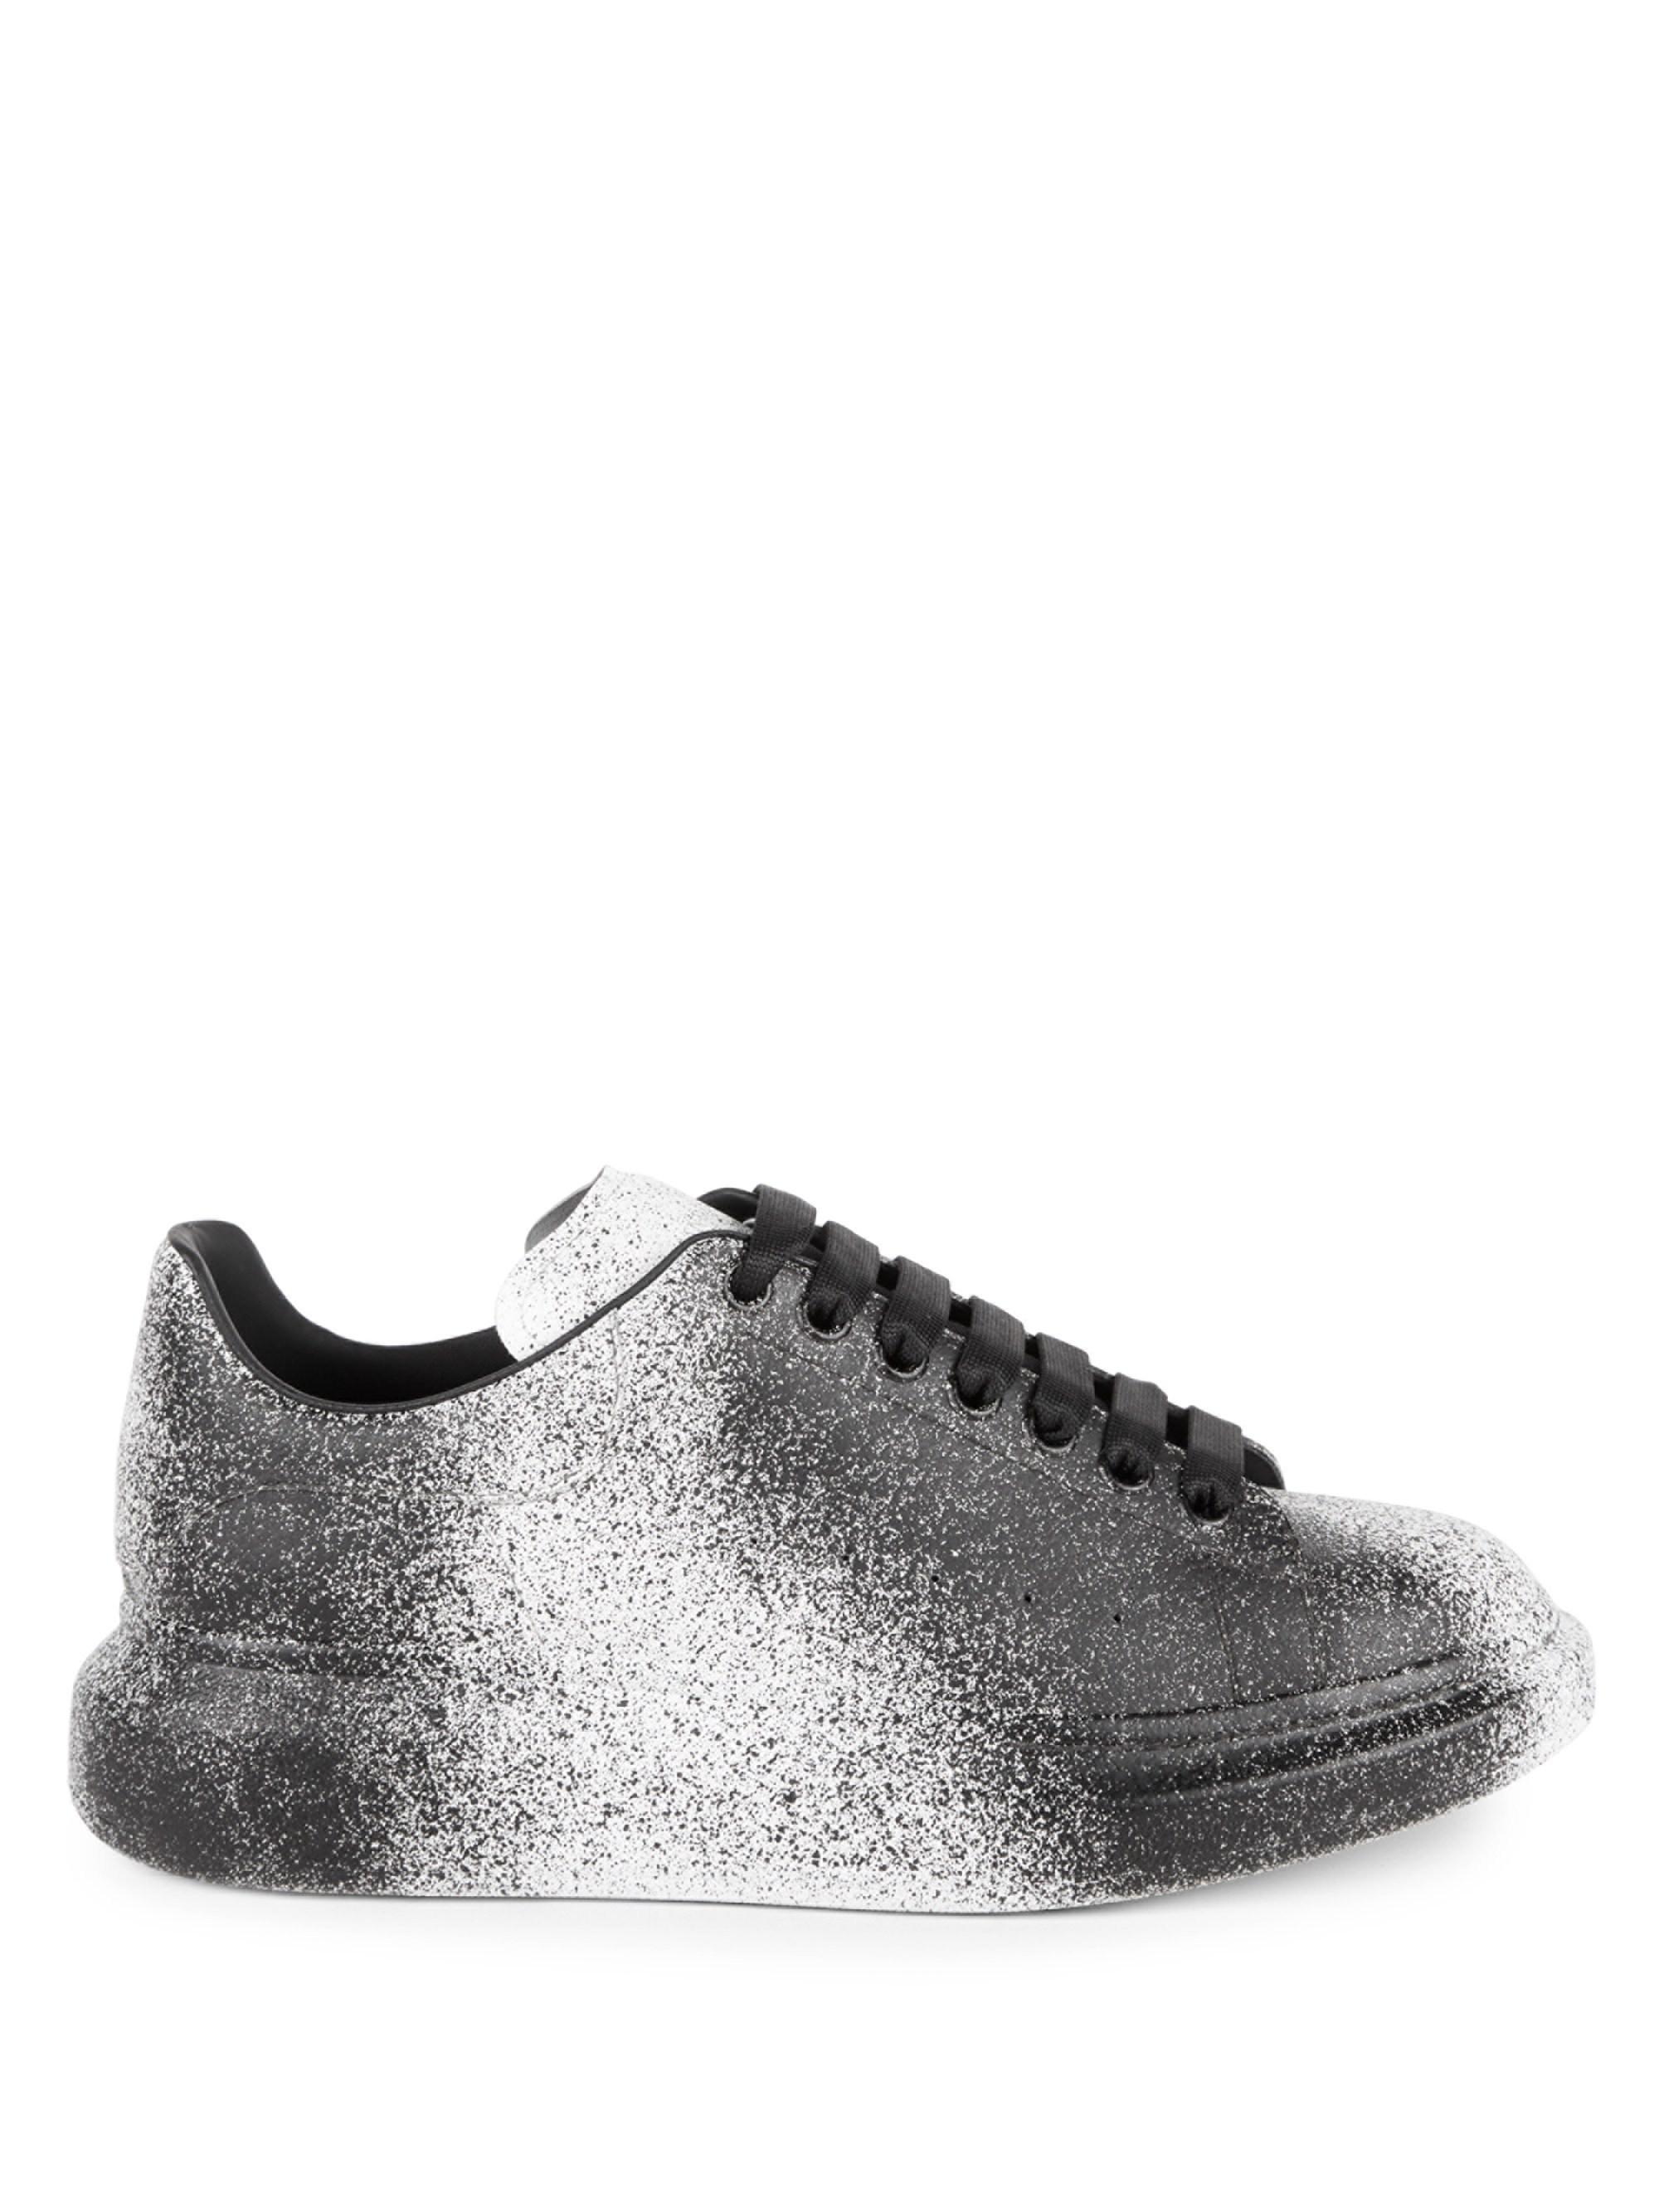 Alexander McQueen Leather Spray Paint Platform Sneakers in Black White ...